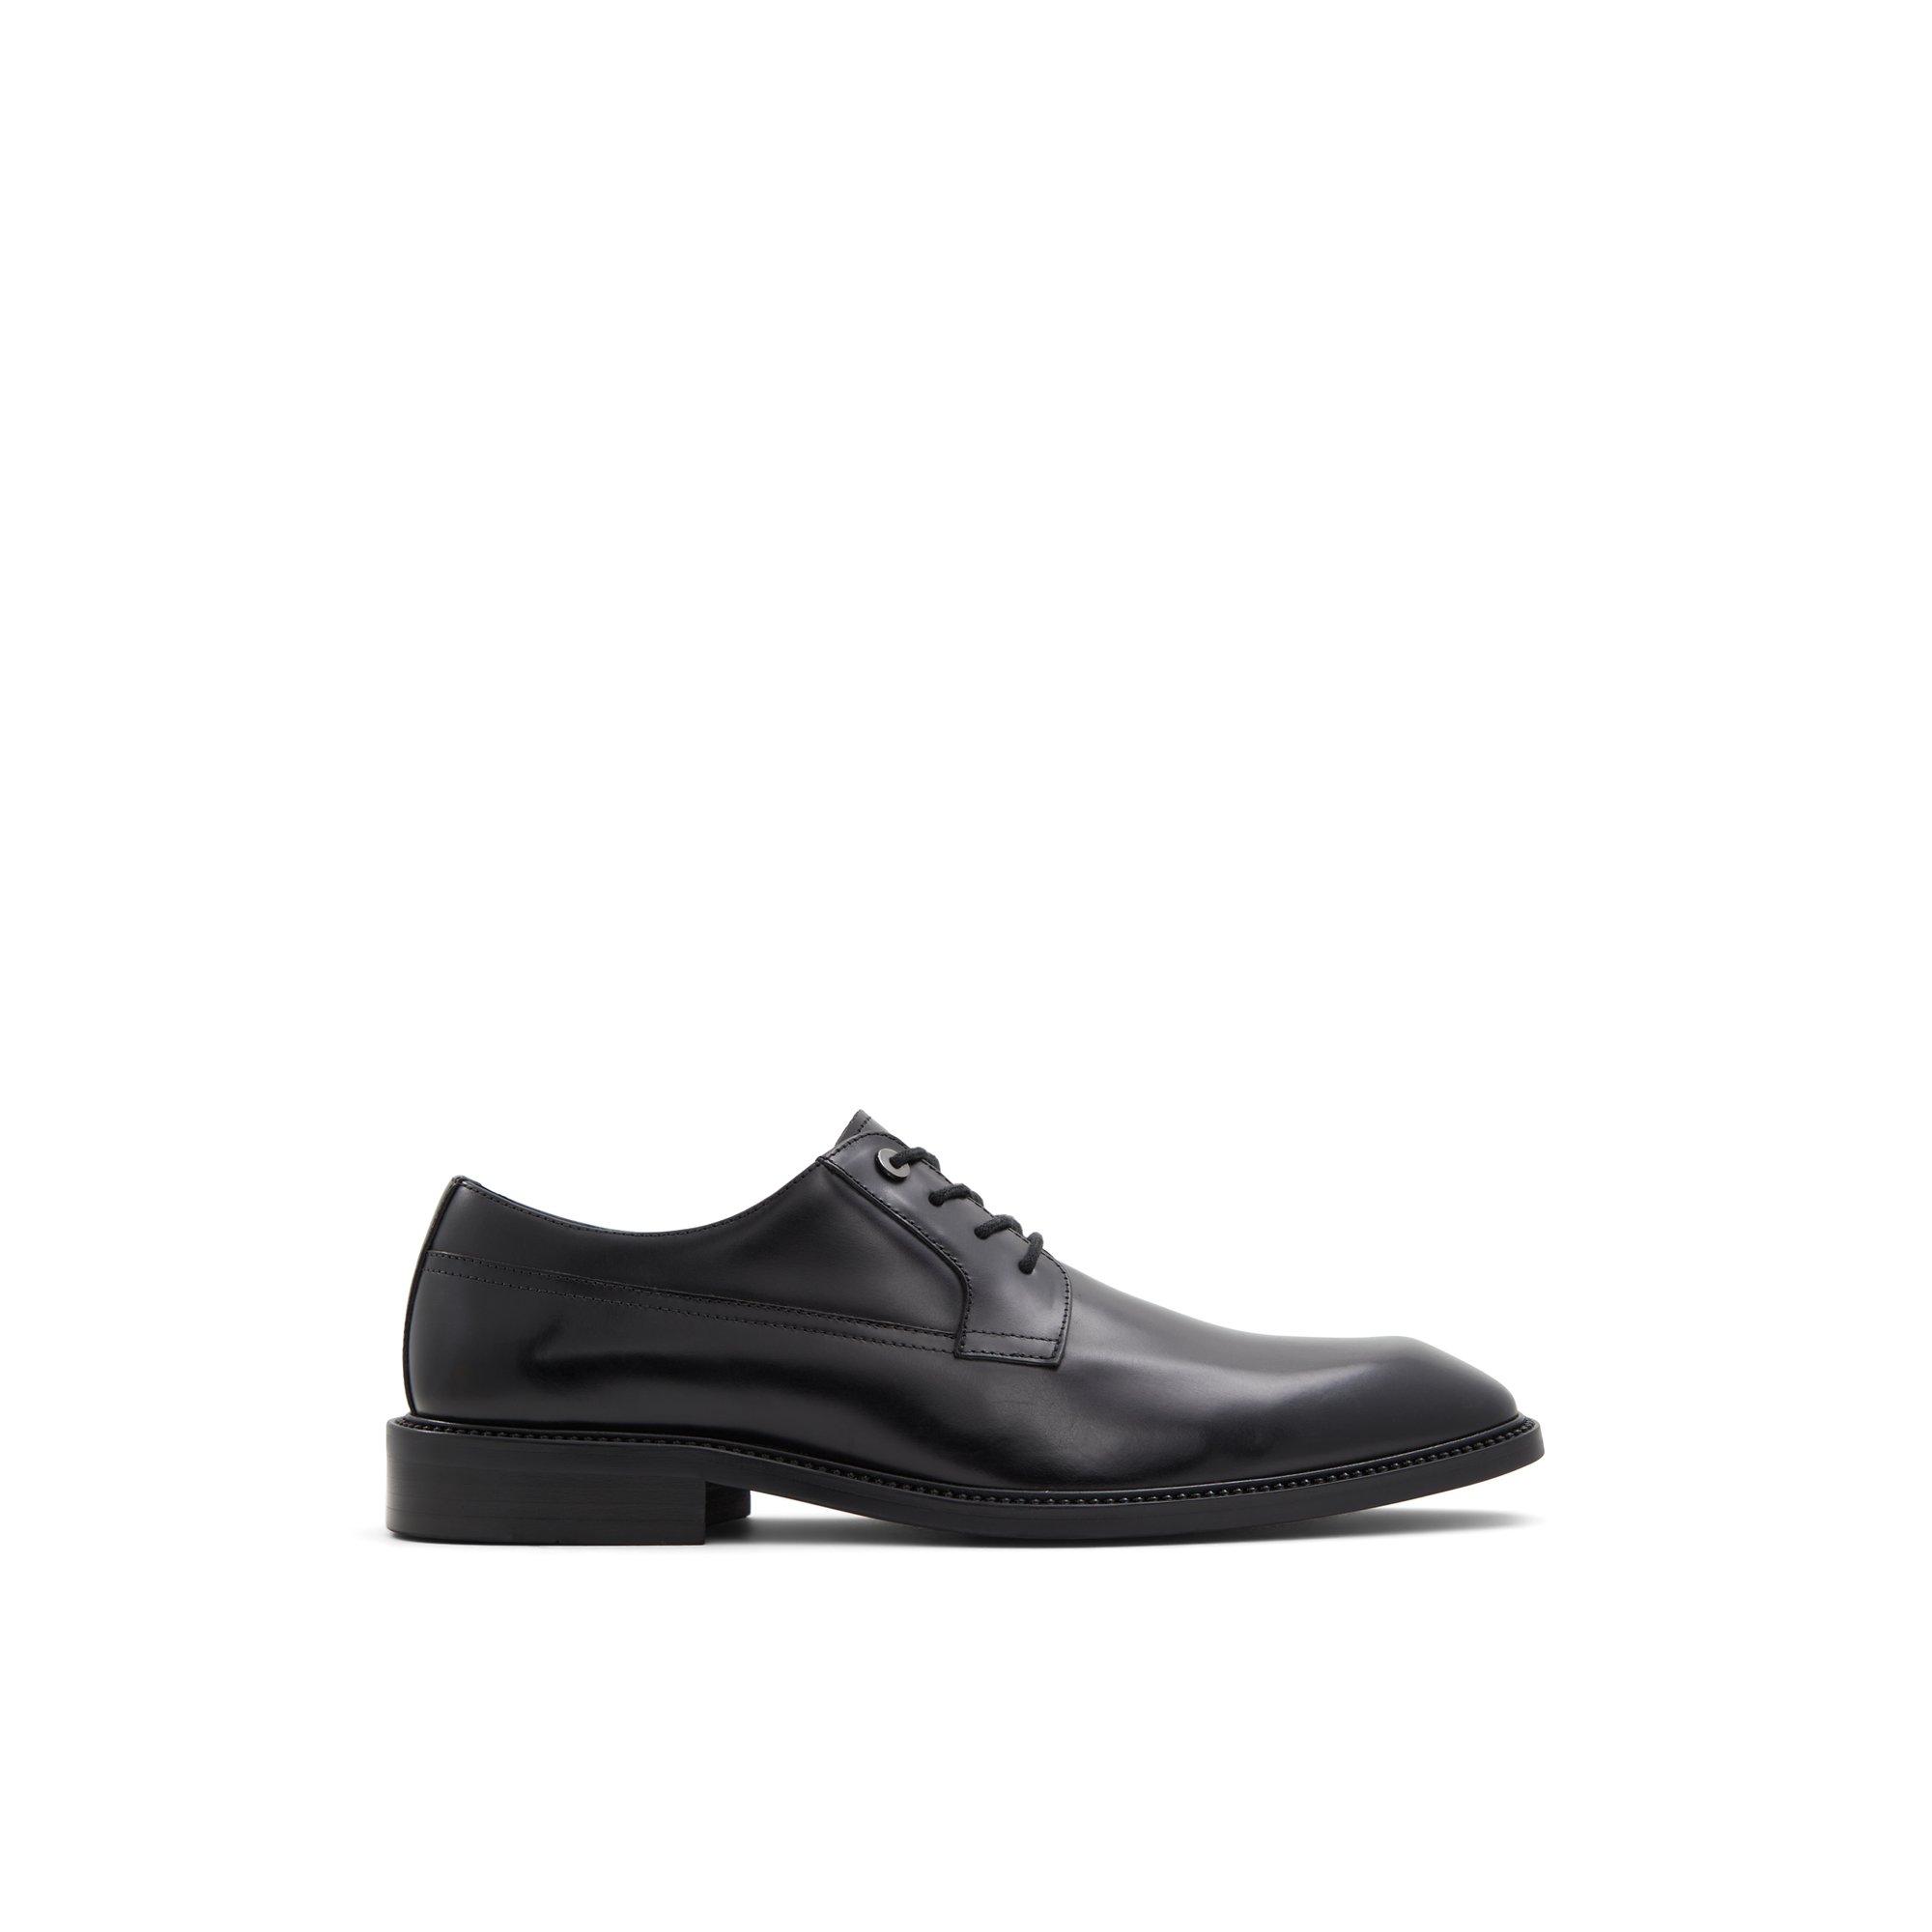 ALDO Boyard - Men's Dress Shoes - Black